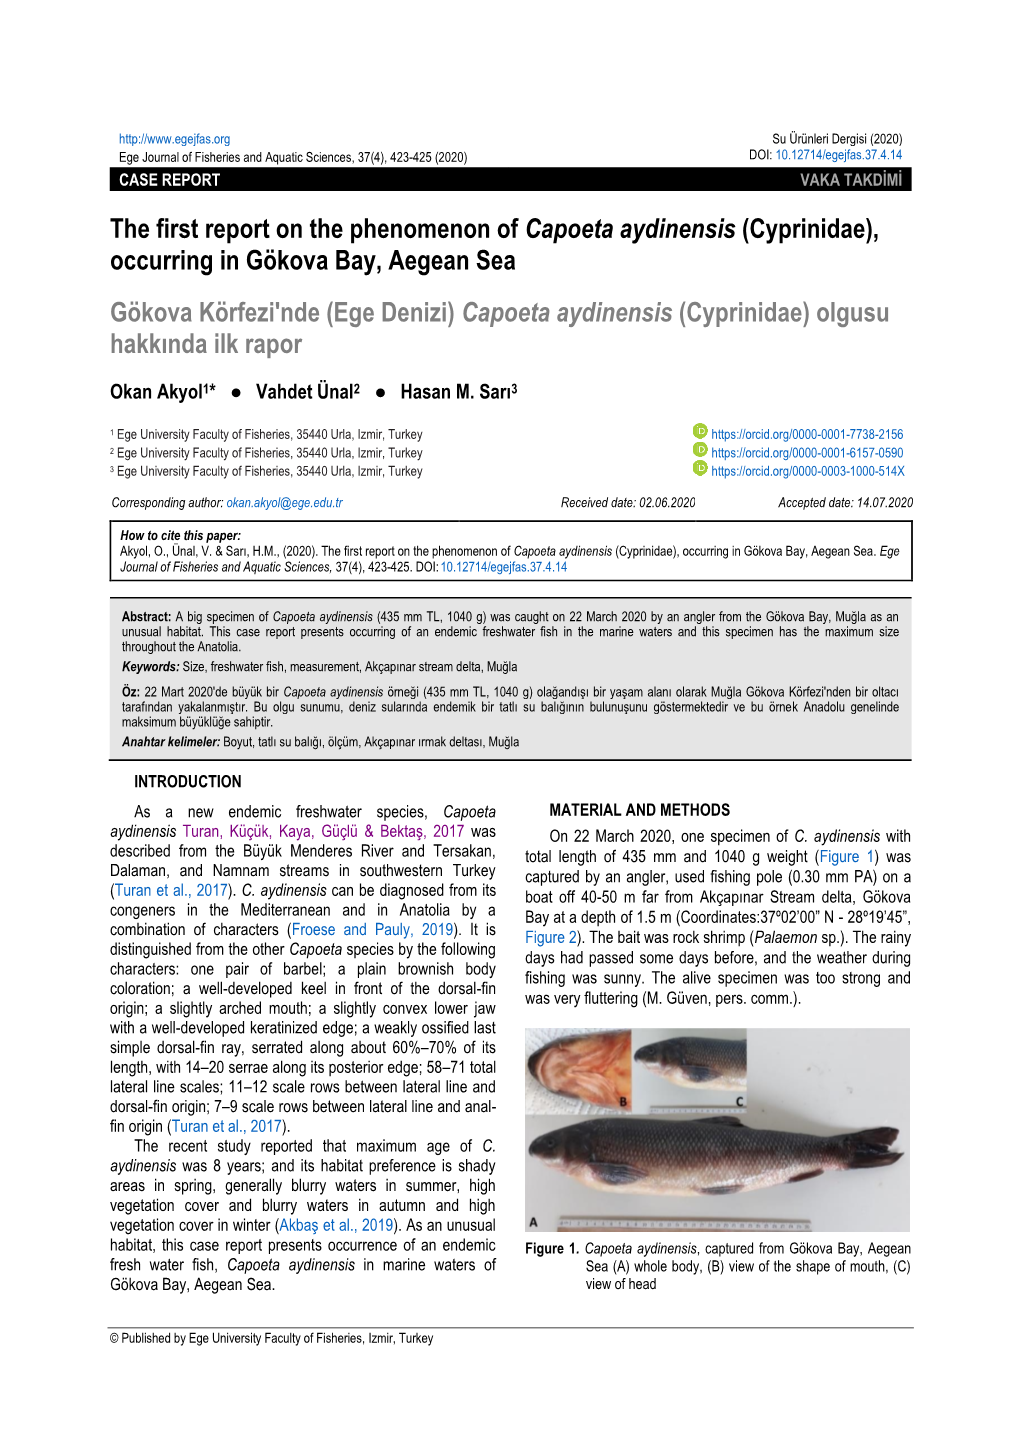 The First Report on the Phenomenon of Capoeta Aydinensis (Cyprinidae